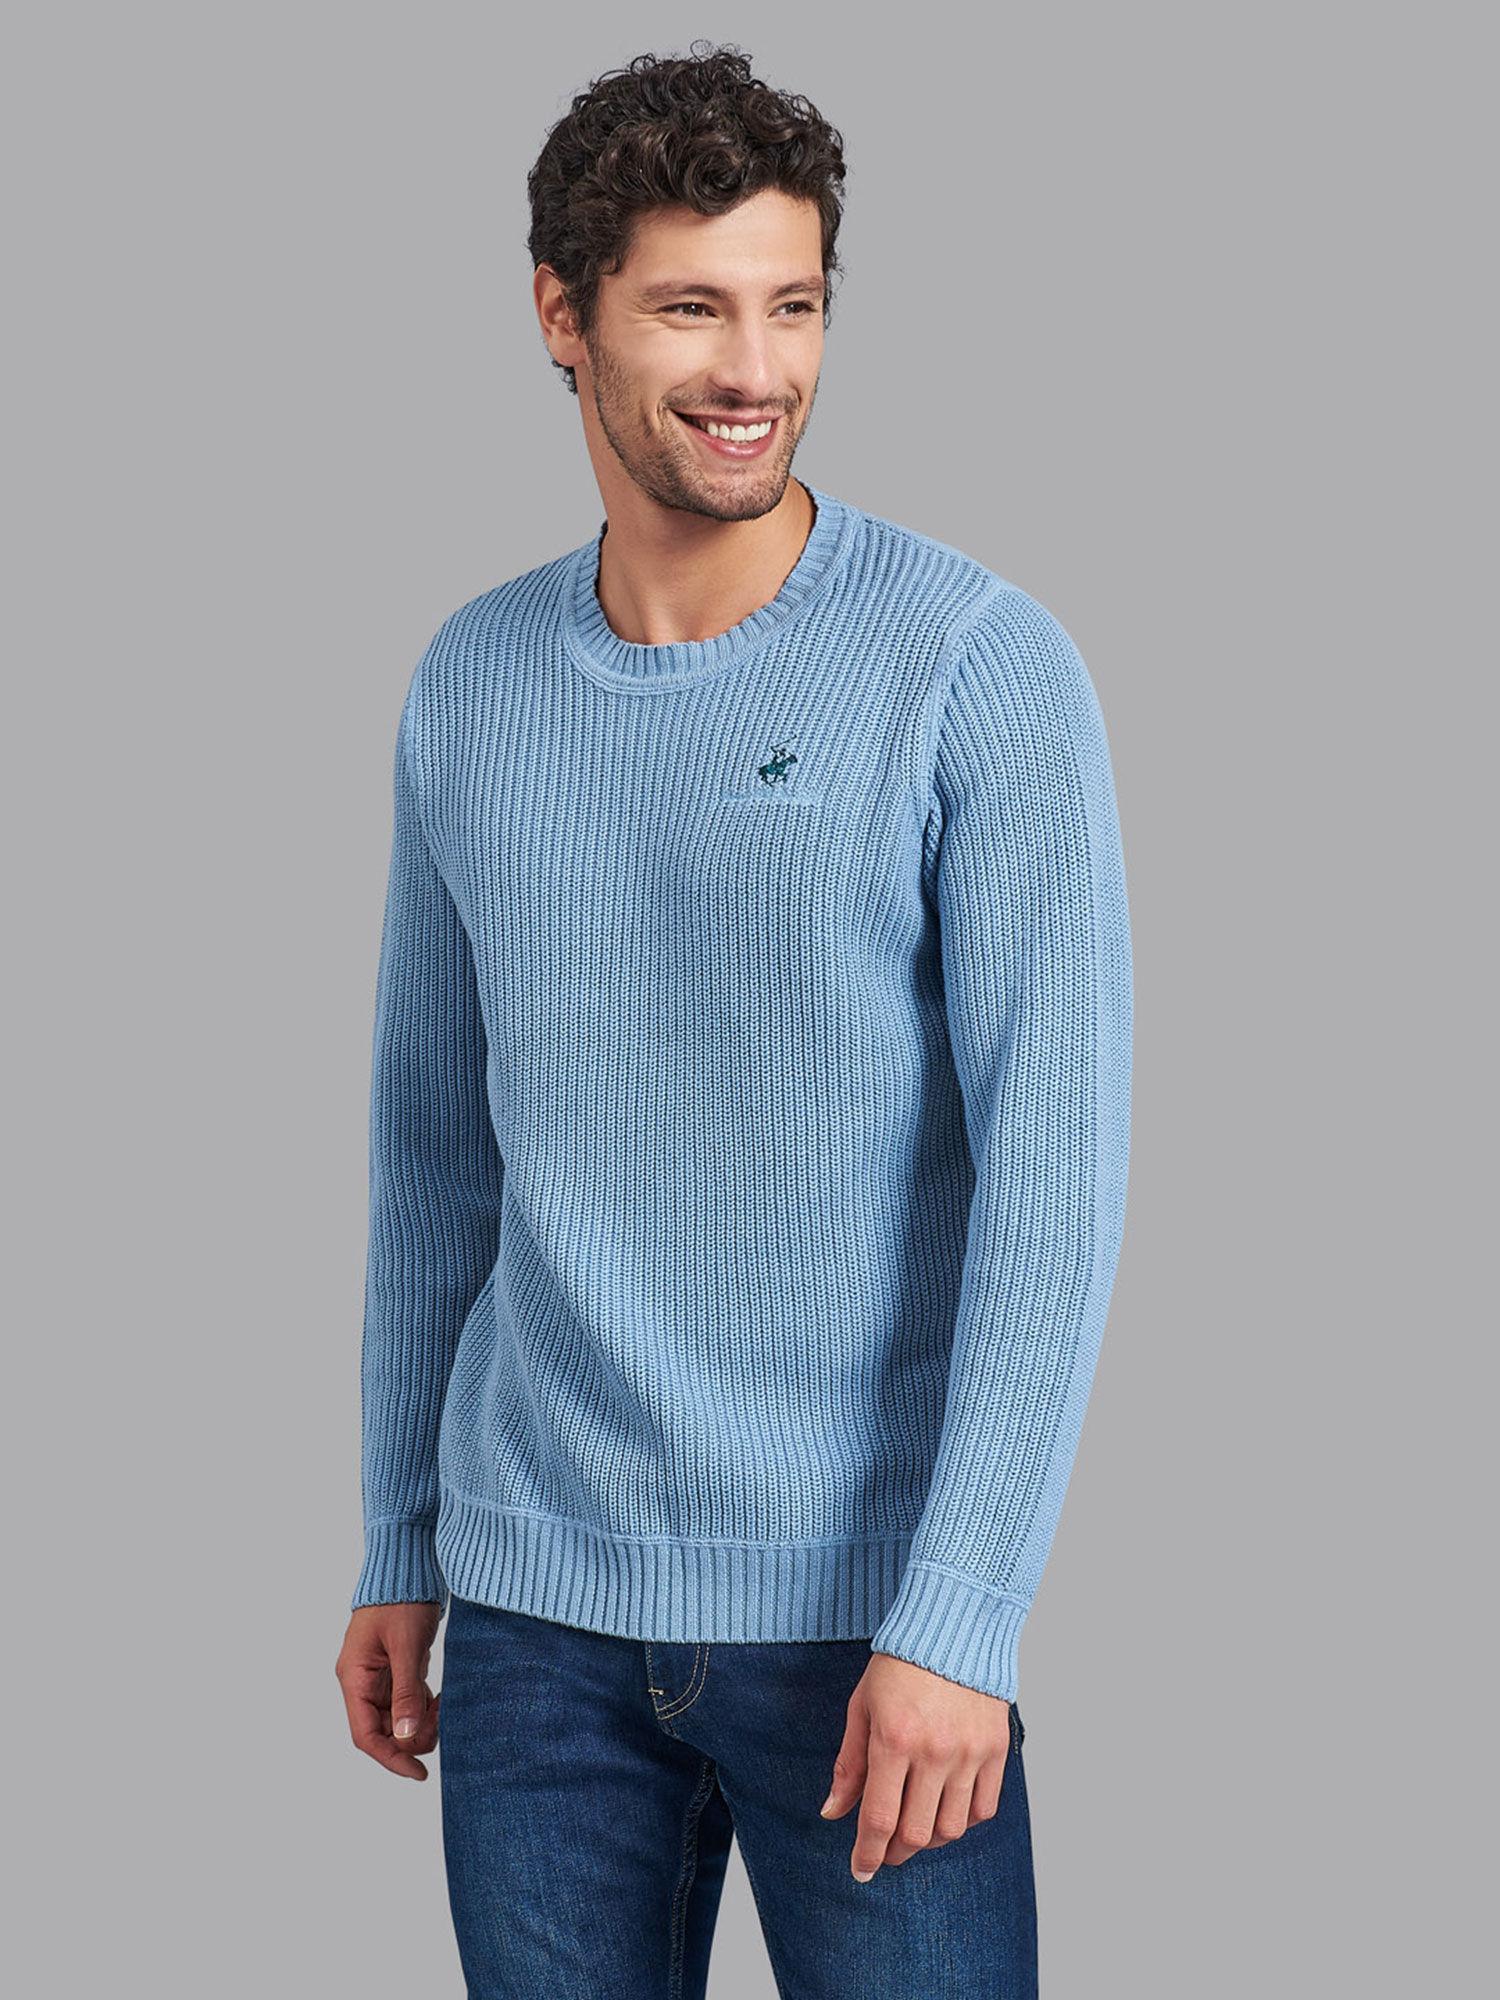 shaker-knit-crew-neck-sweater